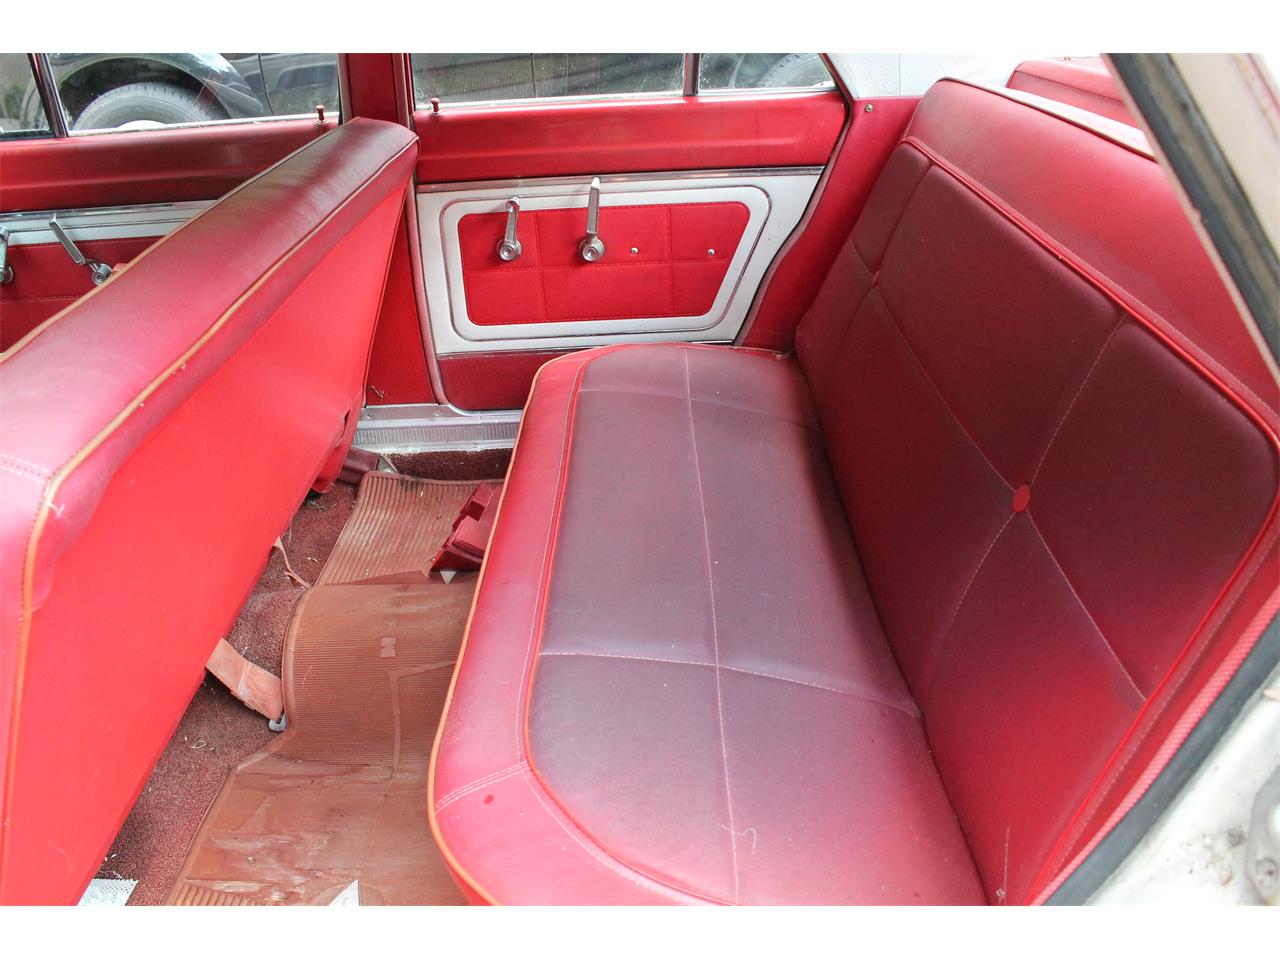 1964 Dodge Dart for sale in Frederick, MD / classiccarsbay.com